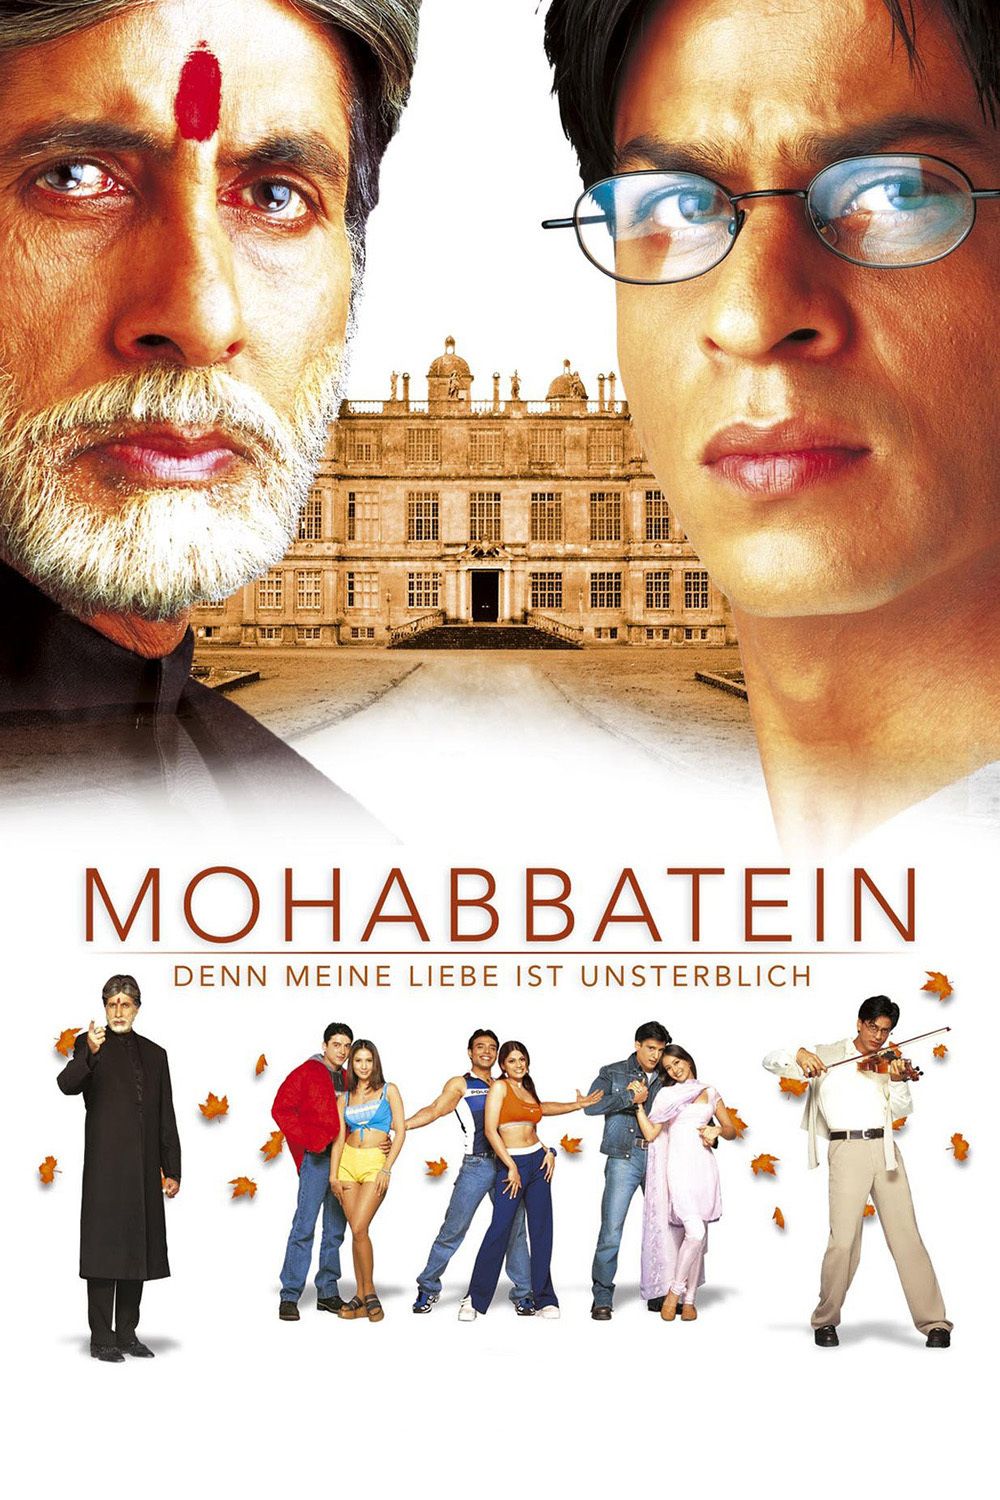 Download Film India Mohabbatein Dan Subtitle Indonesia - bagsrose